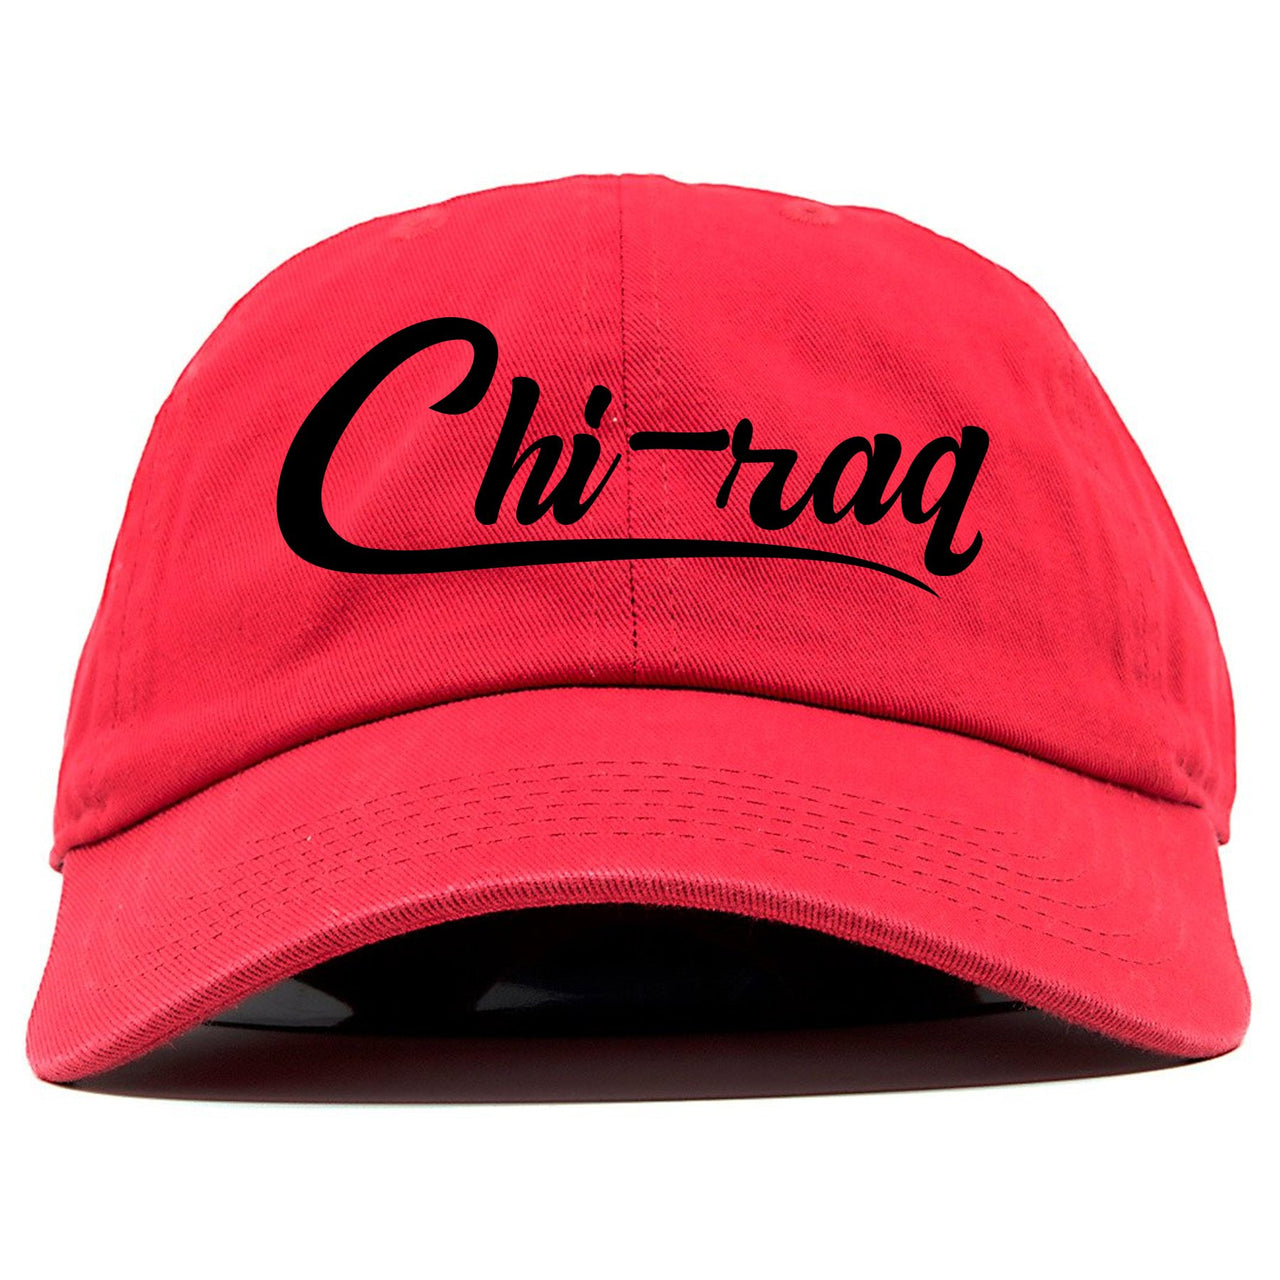 Bred 2019 4s Dad Hat | Chiraq, Red